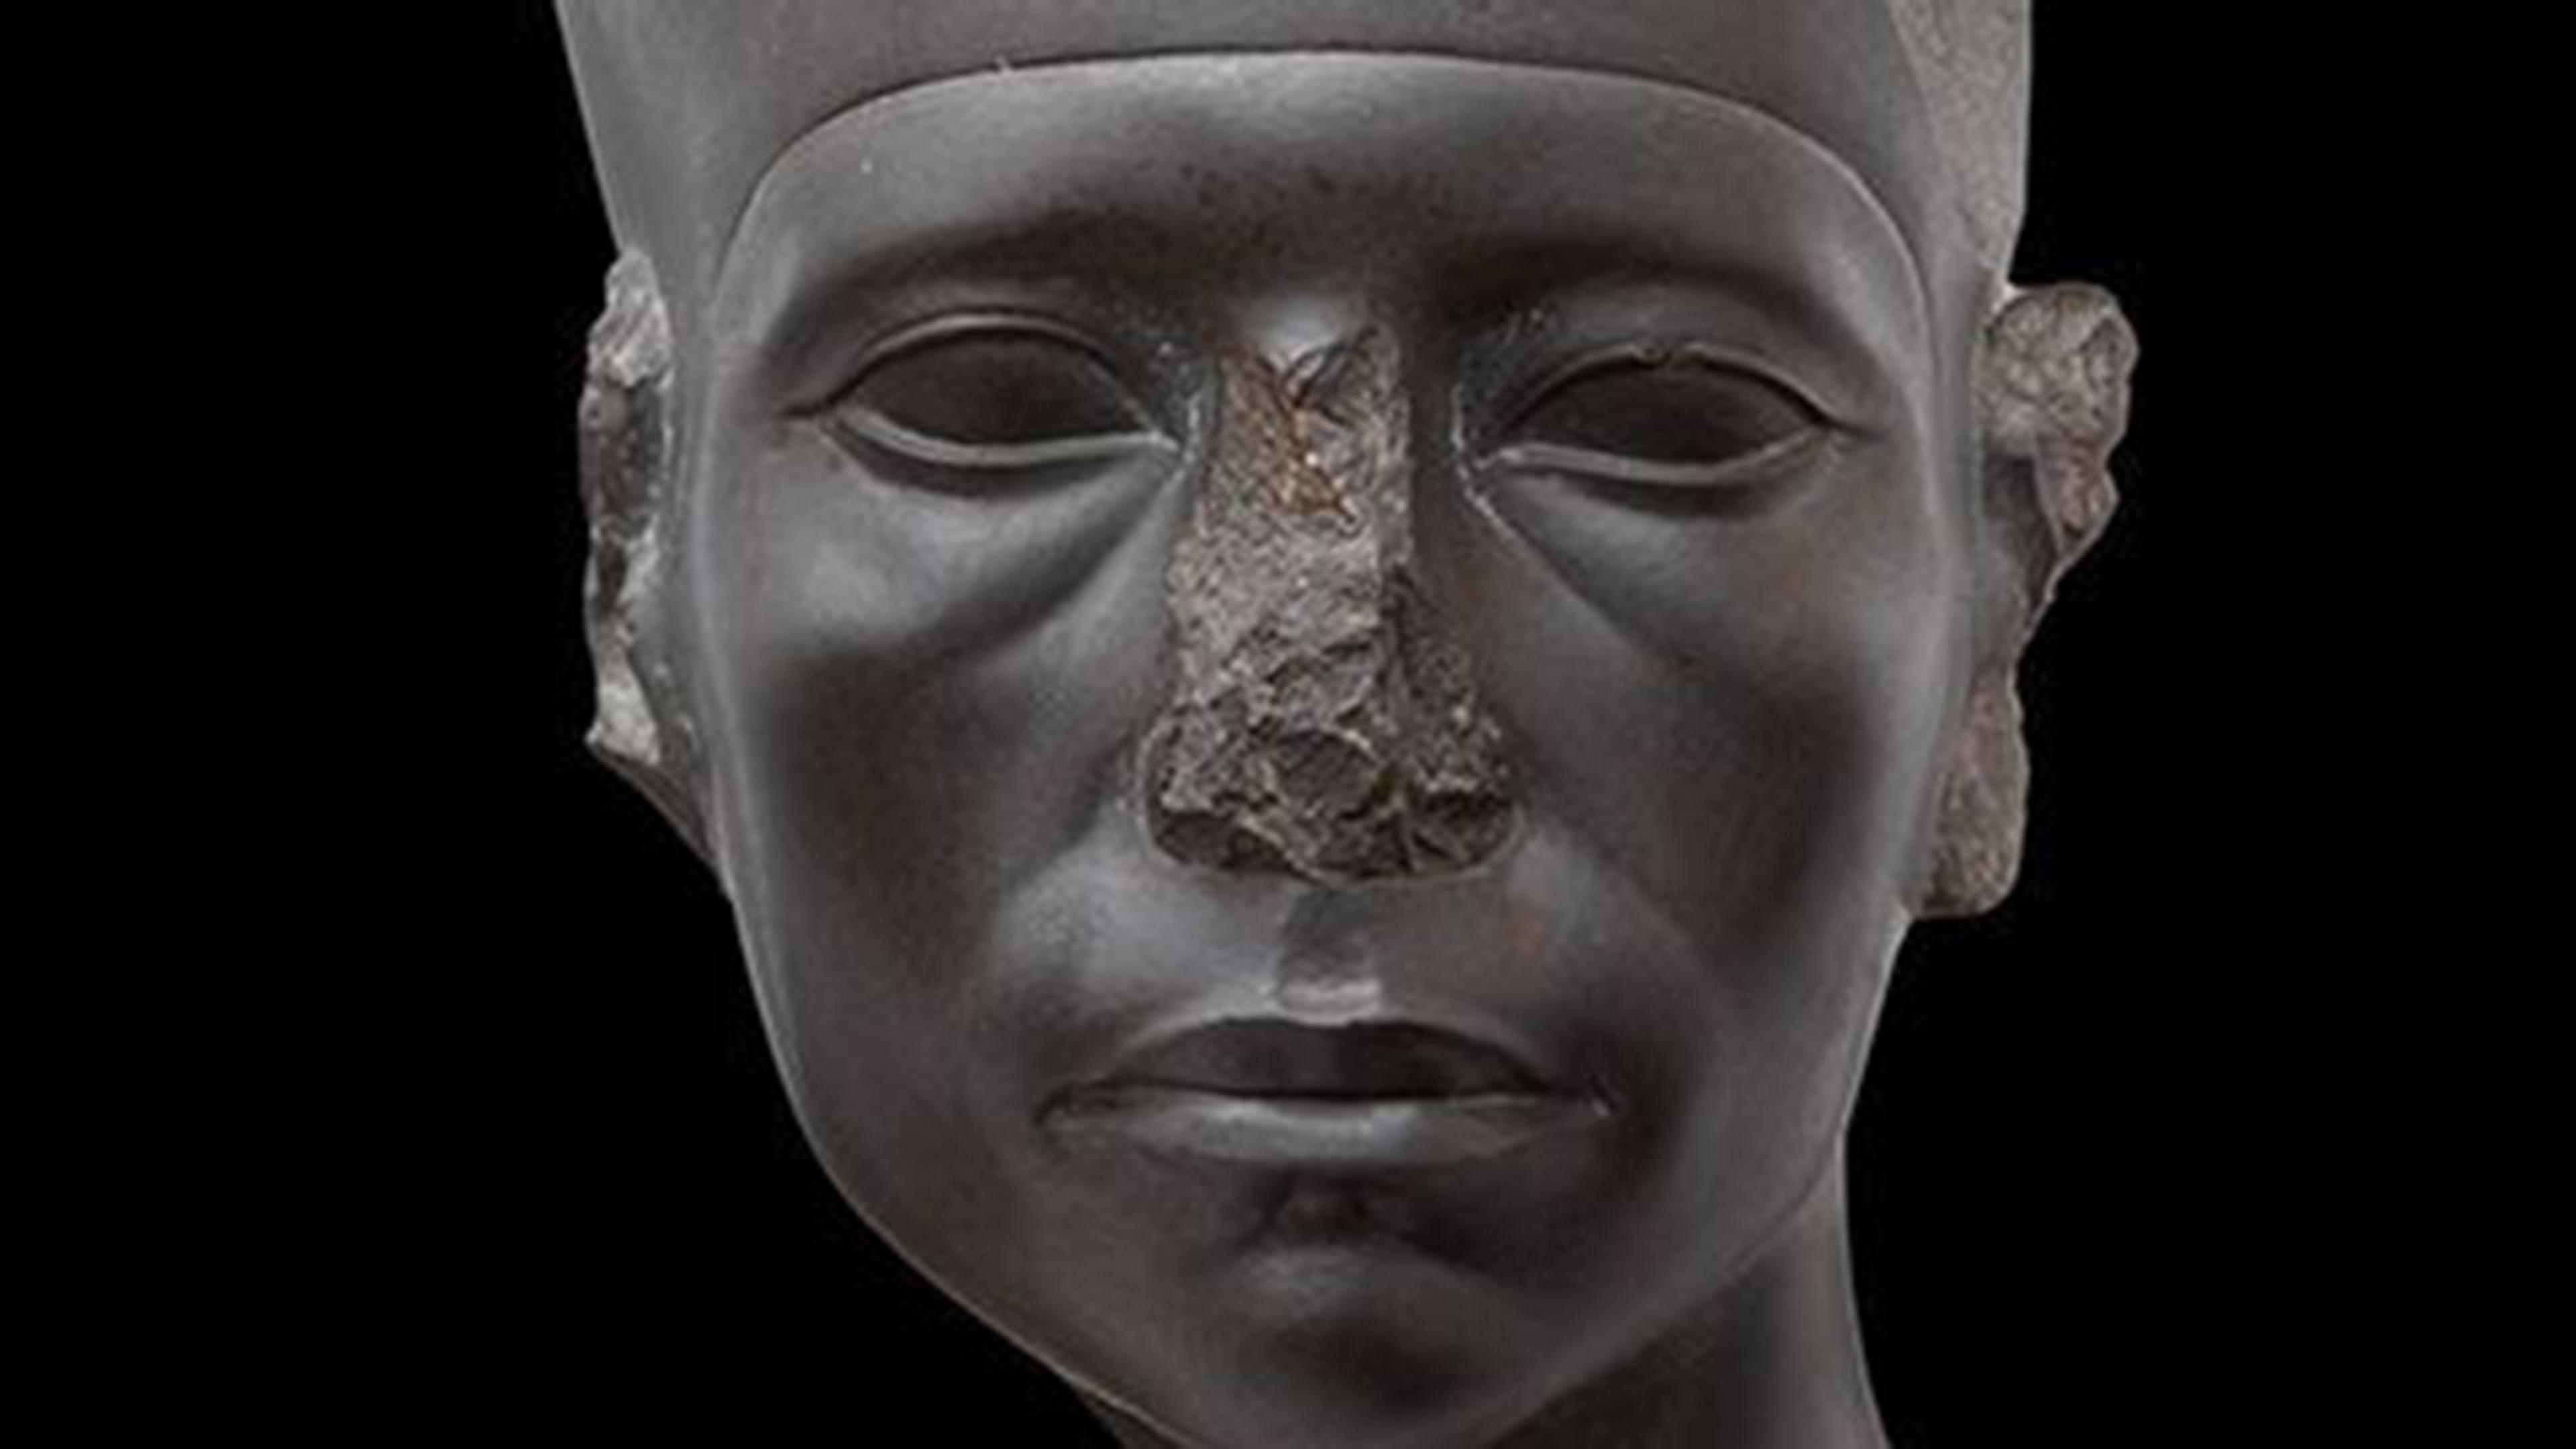 Sculpture of pharaoh's face